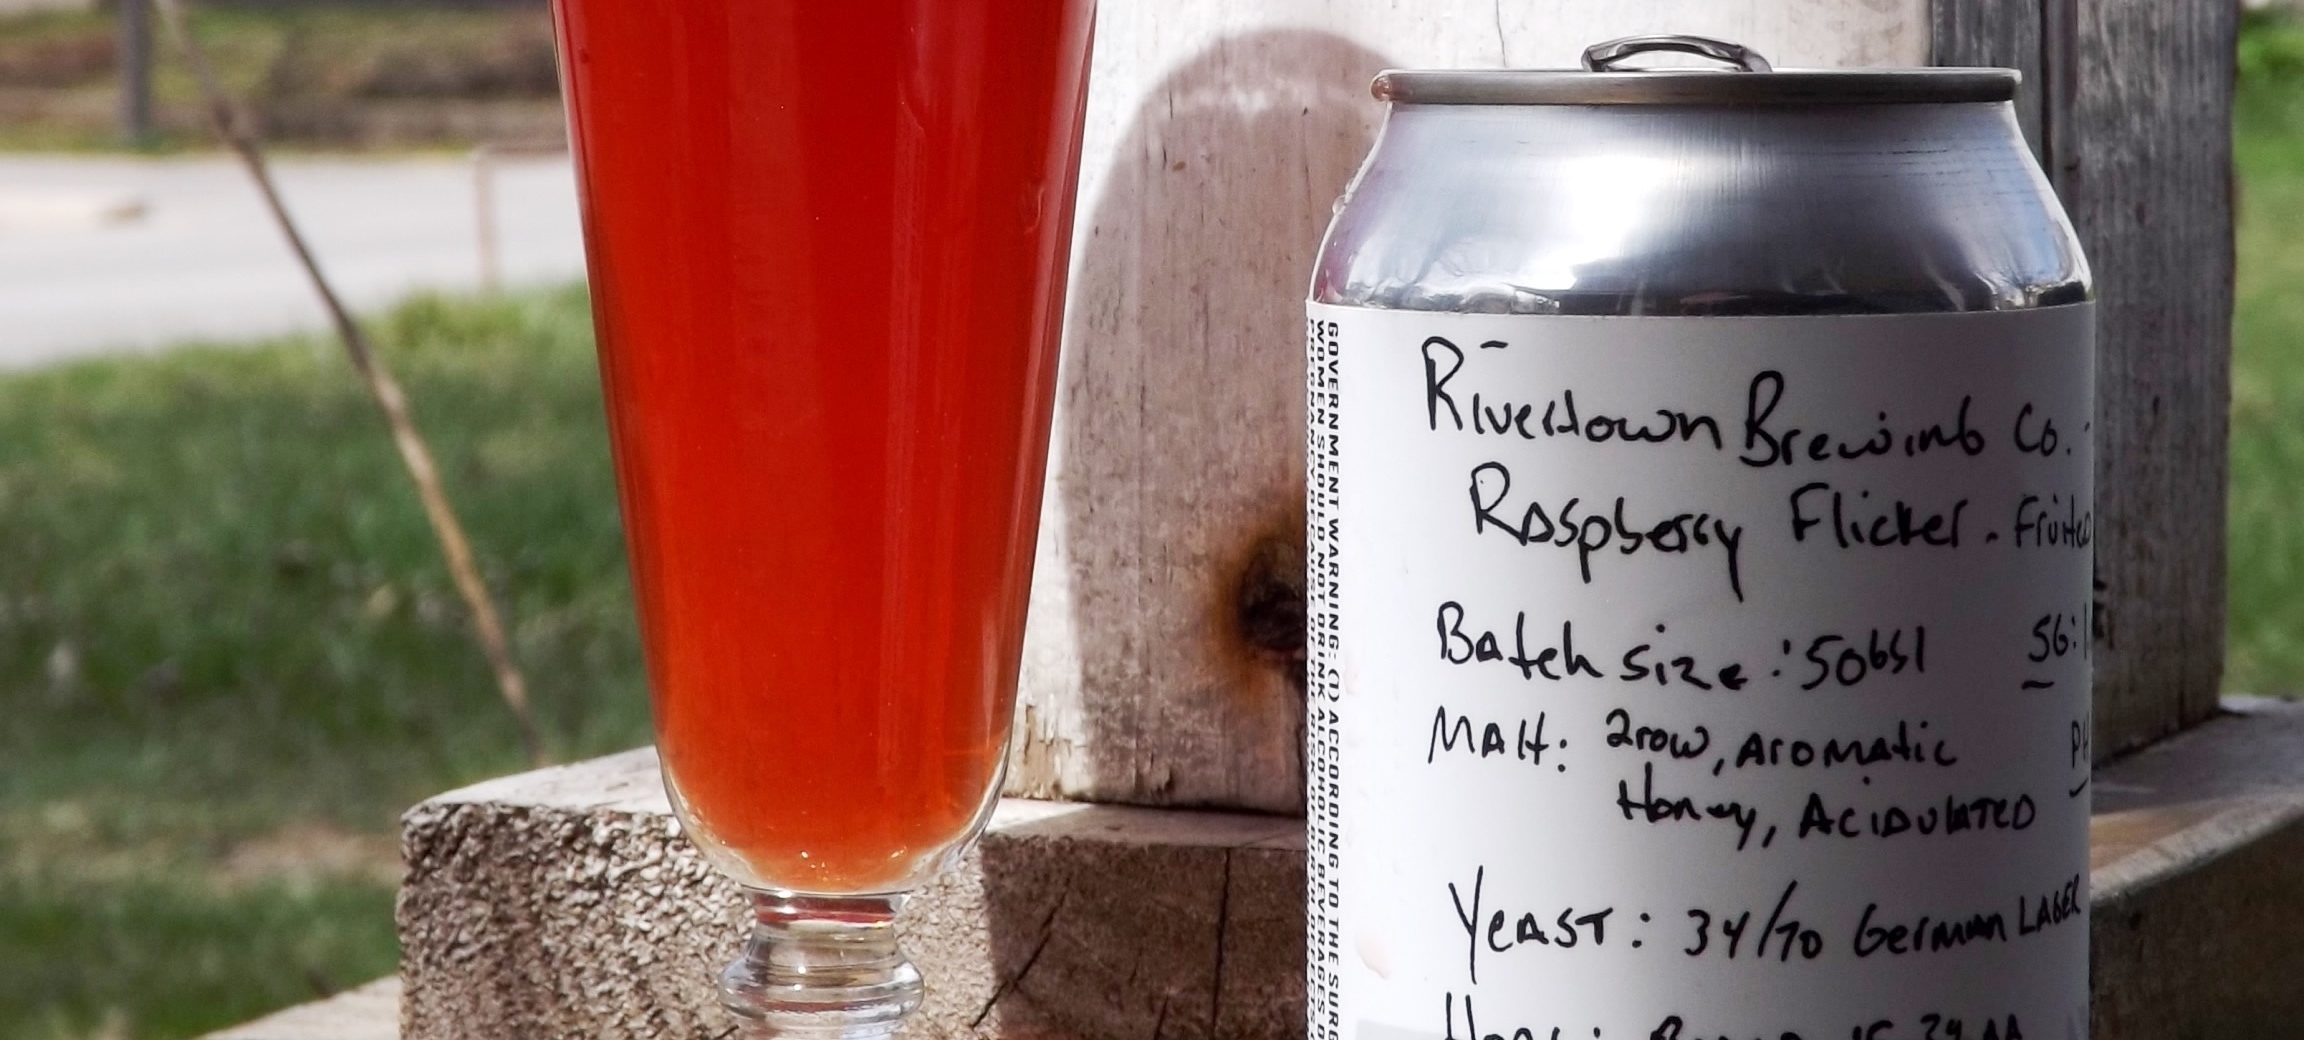 Rivertown Brewing | Raspberry Flicker